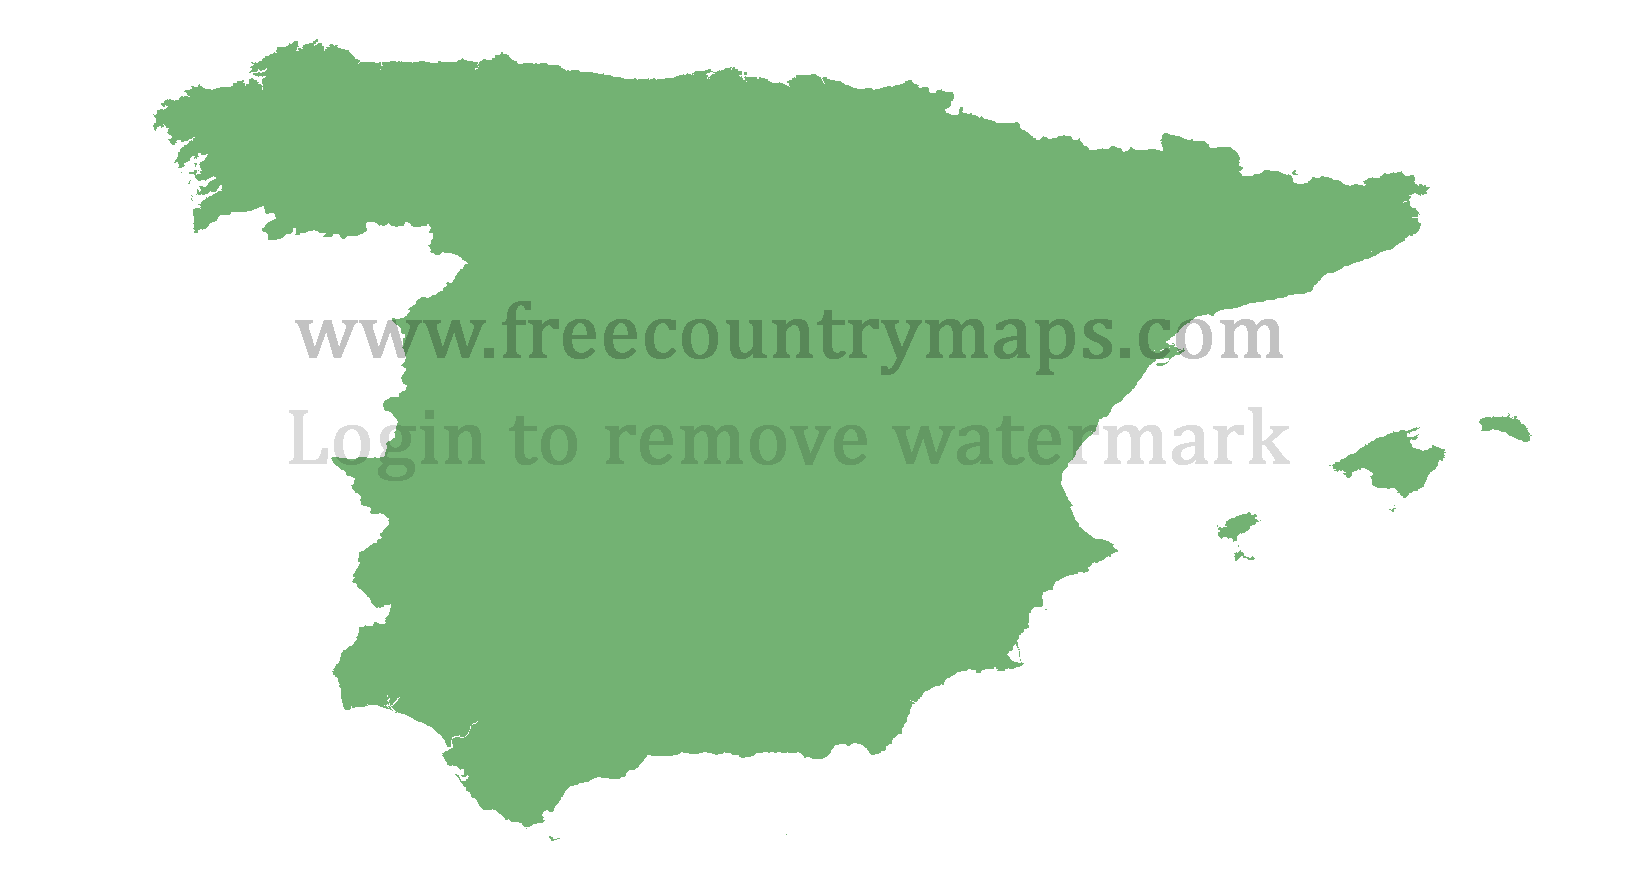 Blank Map of Spain